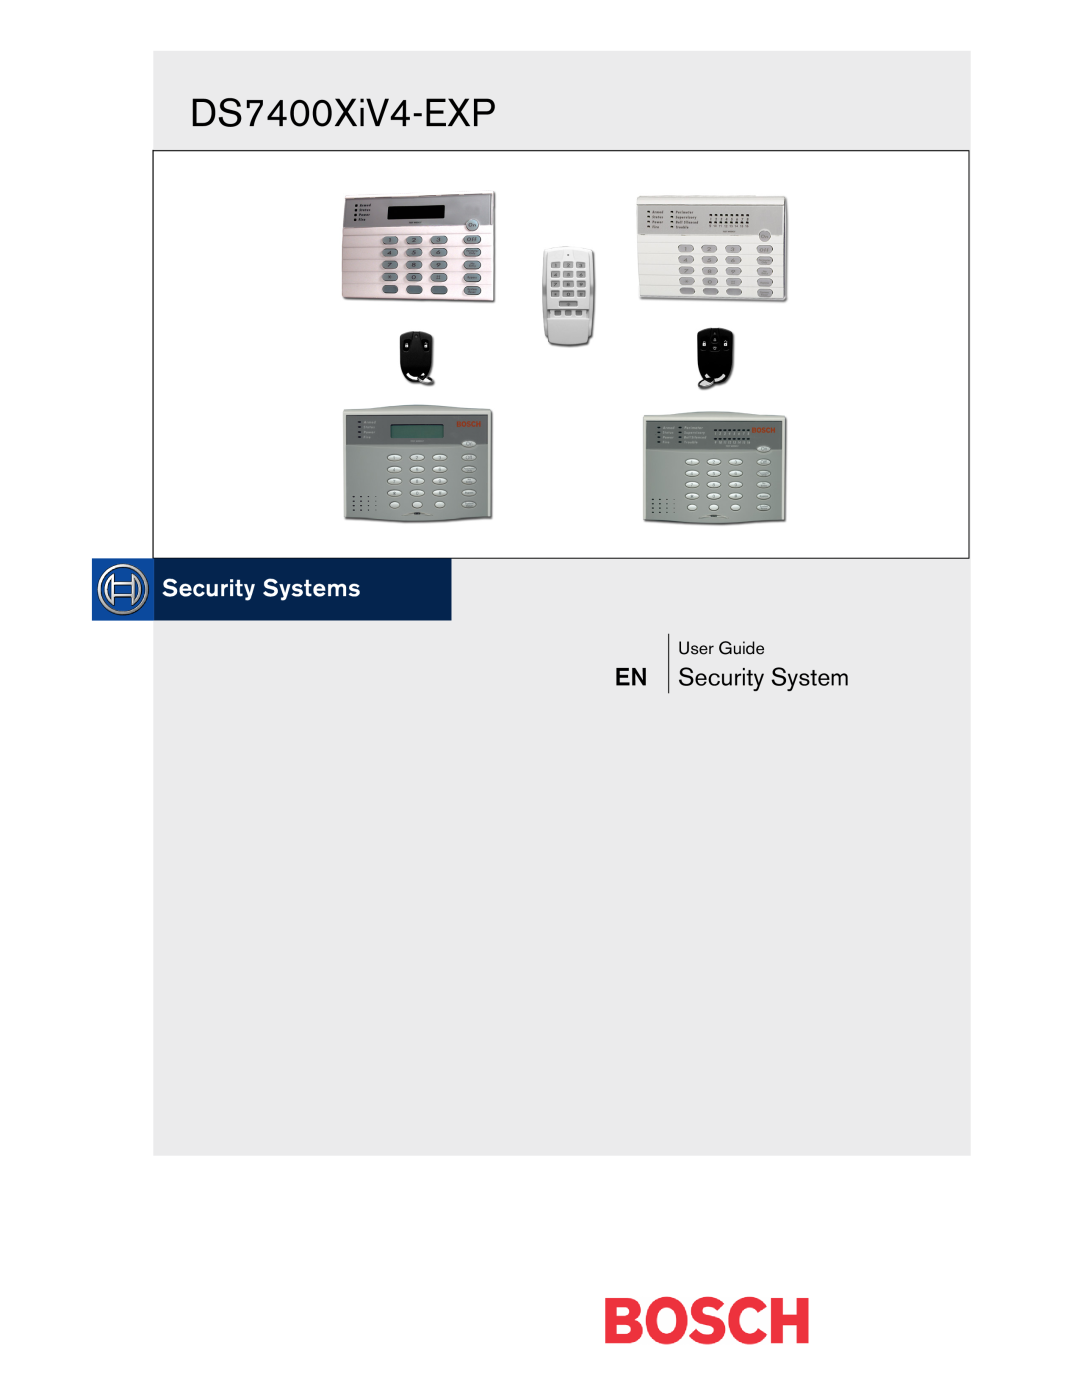 Bosch Appliances DS7400XIV4-EXP manual User Guide, DS7400XiV4-EXP, Security System 